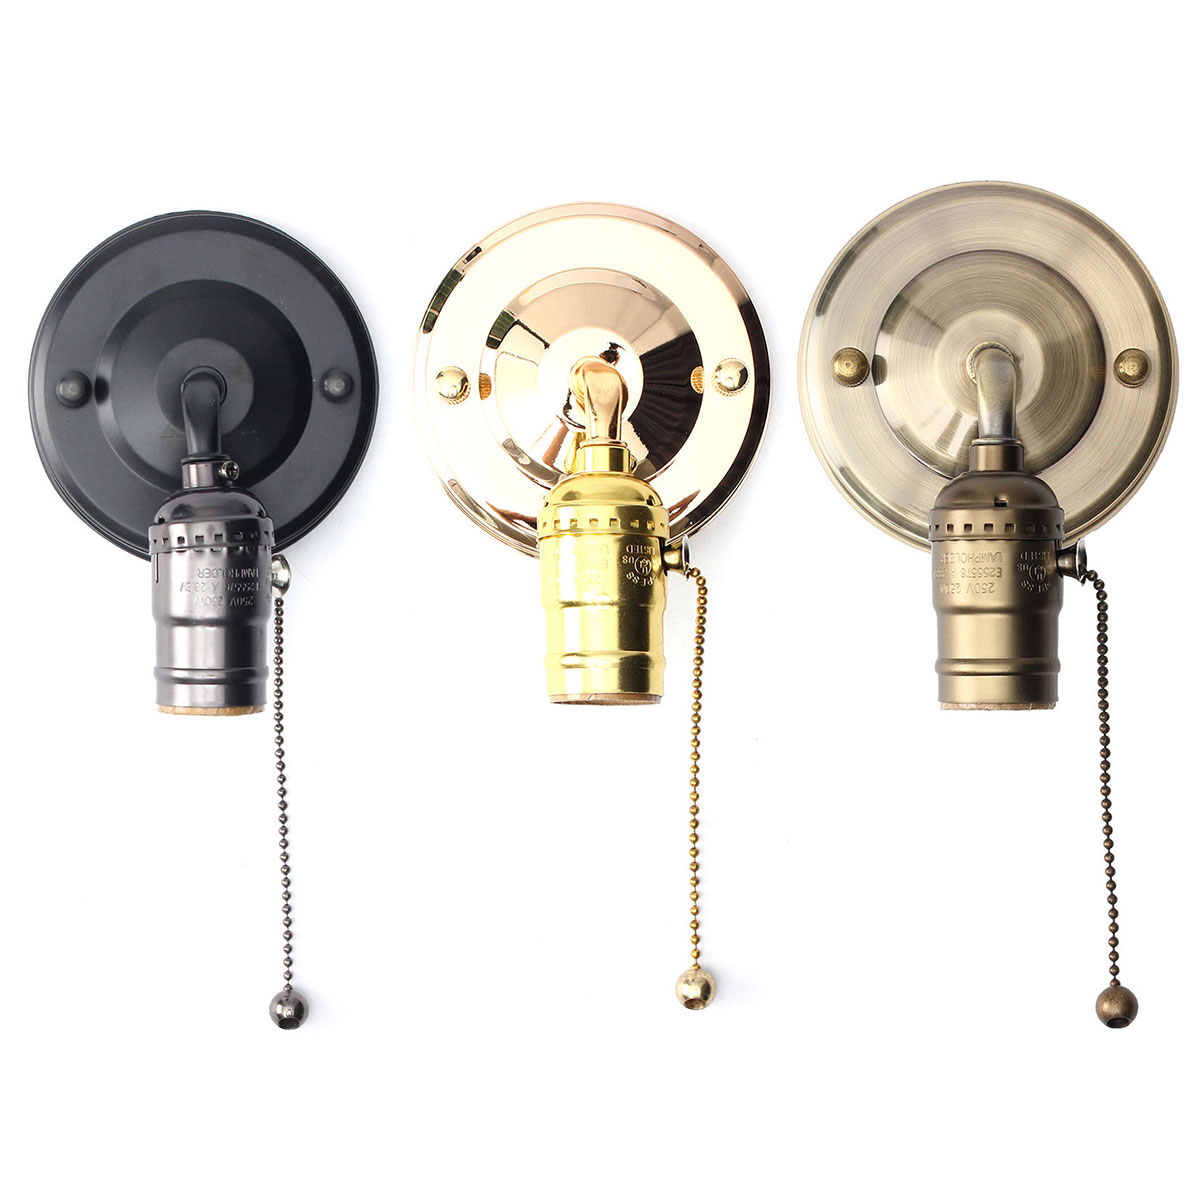 E27-Antique-Vintage-Wall-Light-Chain-Design-Sconce-Lamp-Bulb-Socket-Holder-Fixture-1077627